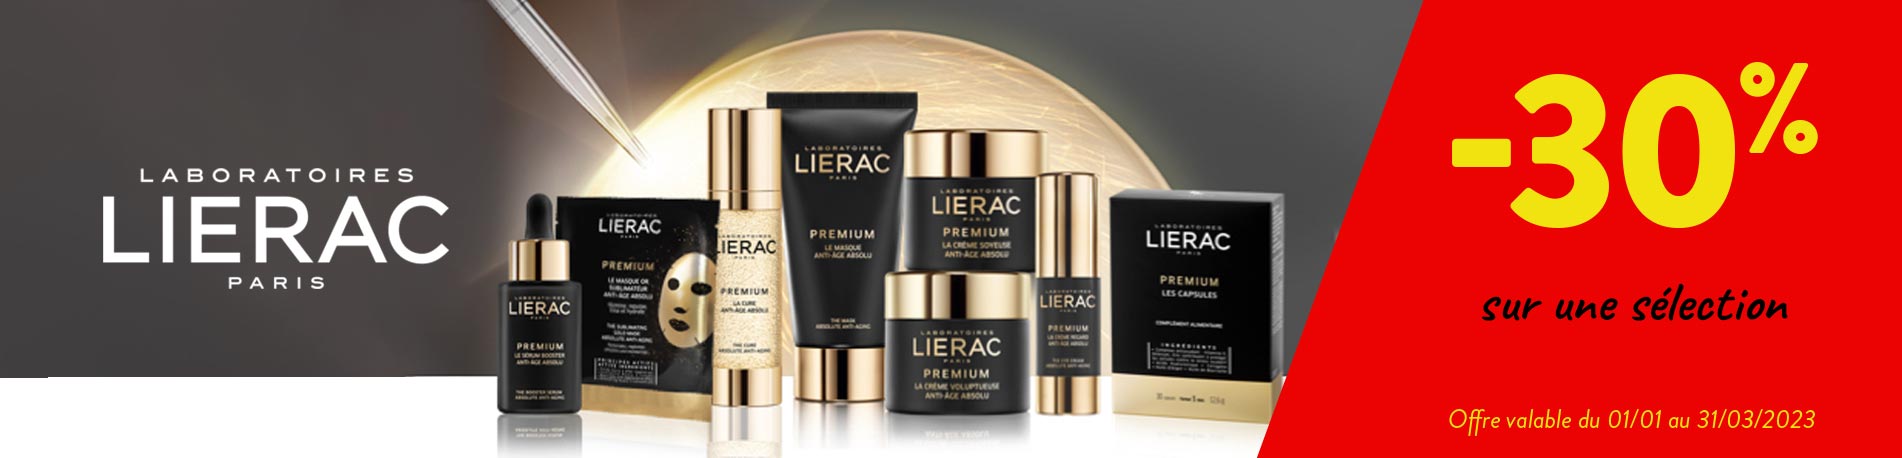 promotion Lierac premium